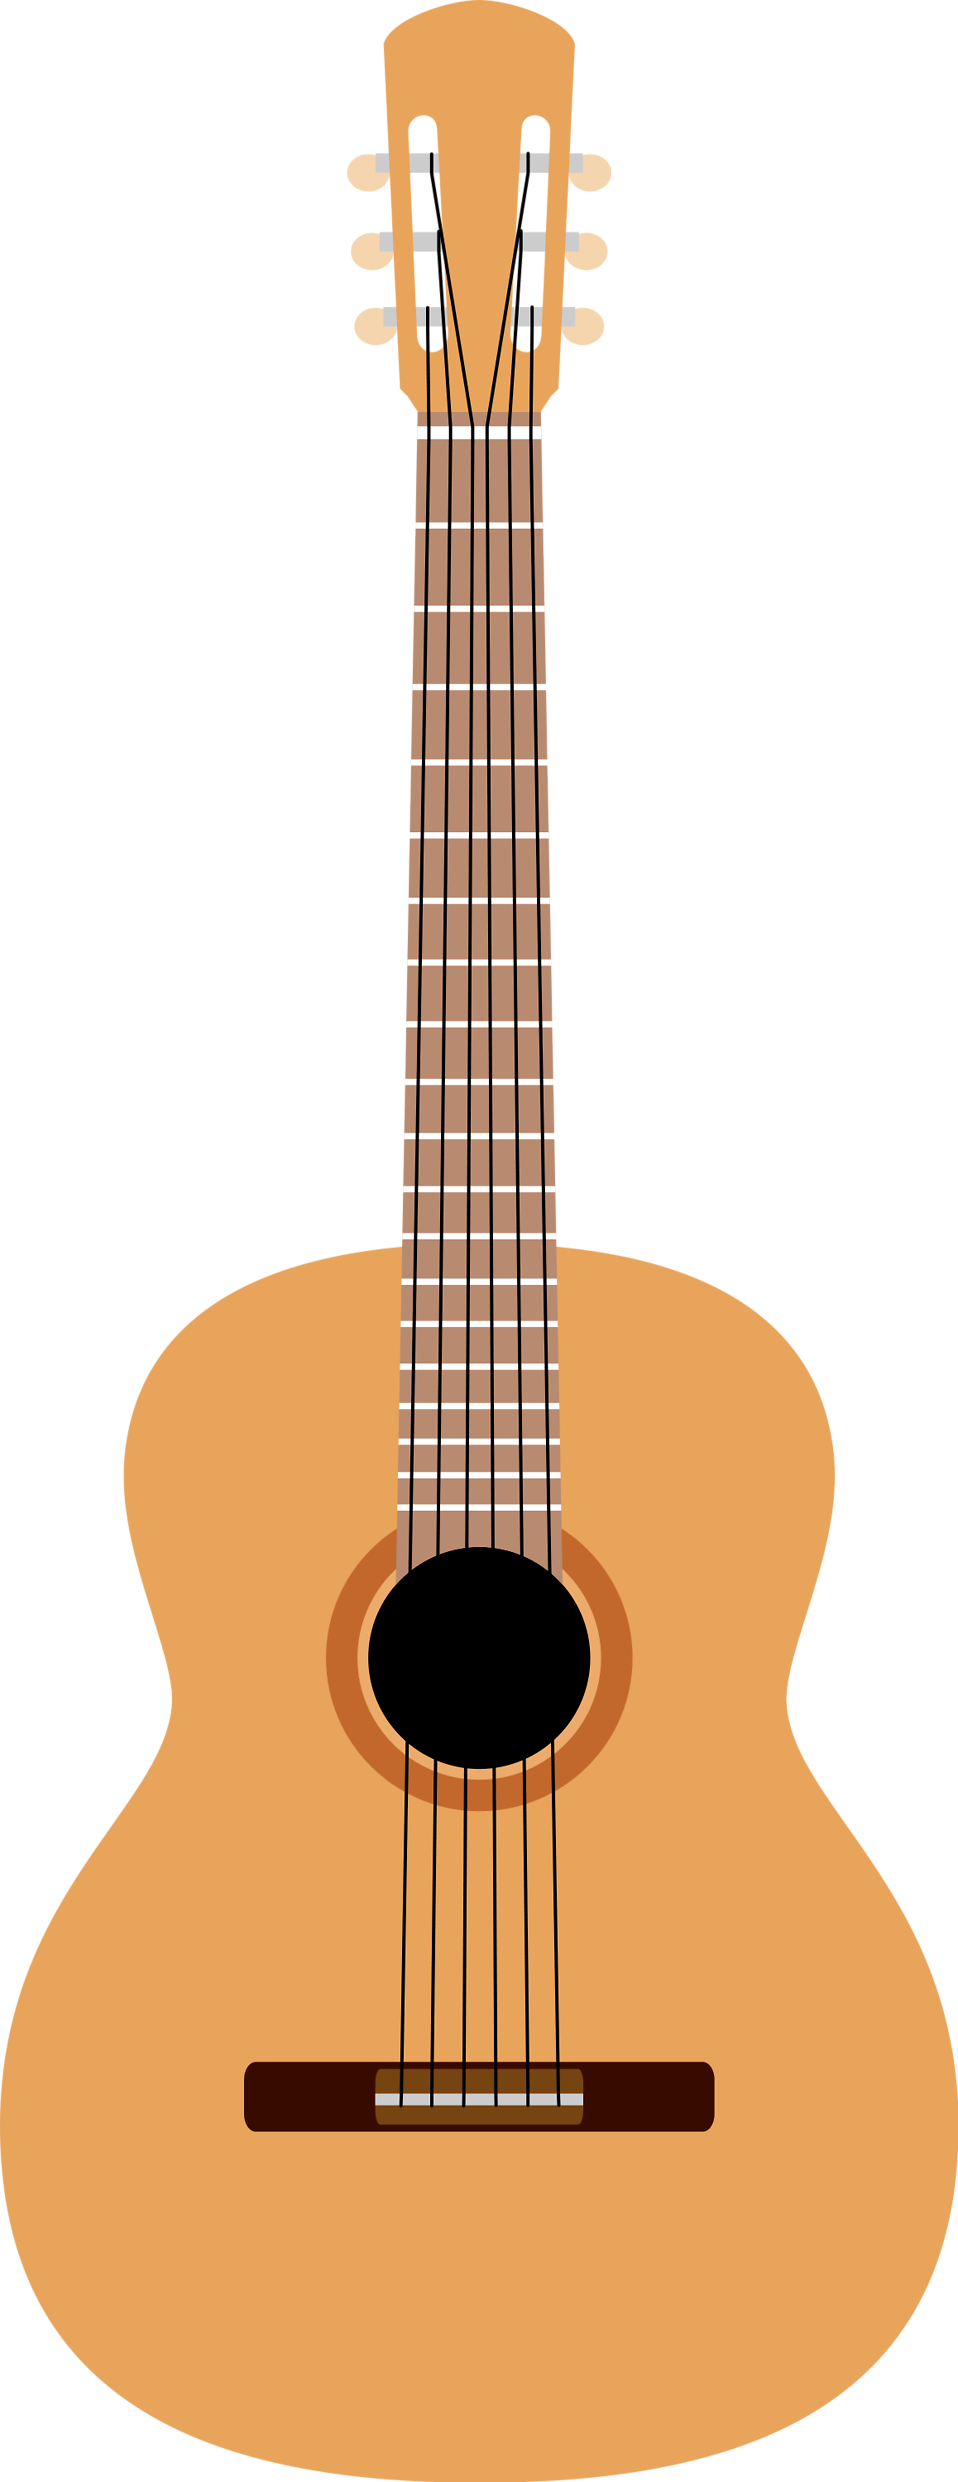 guitar png images